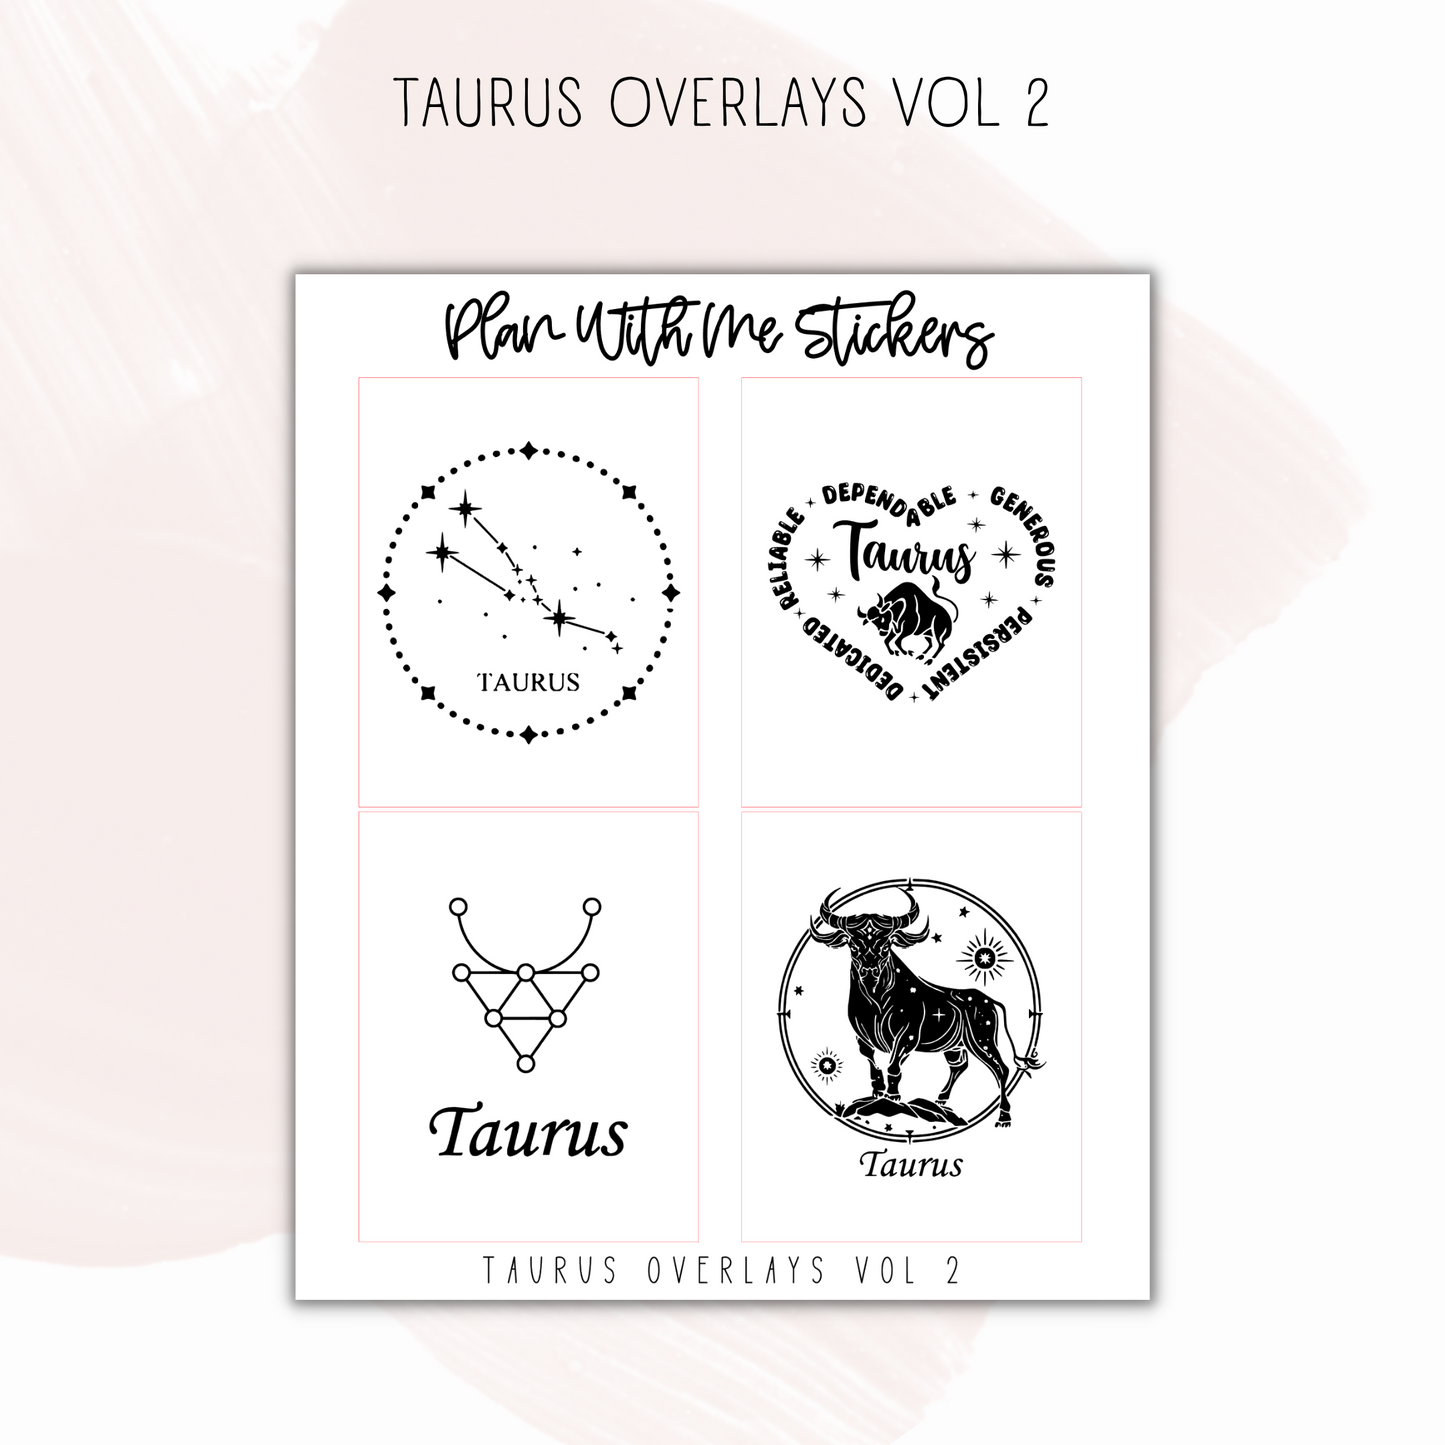 Taurus Overlays Vol 2